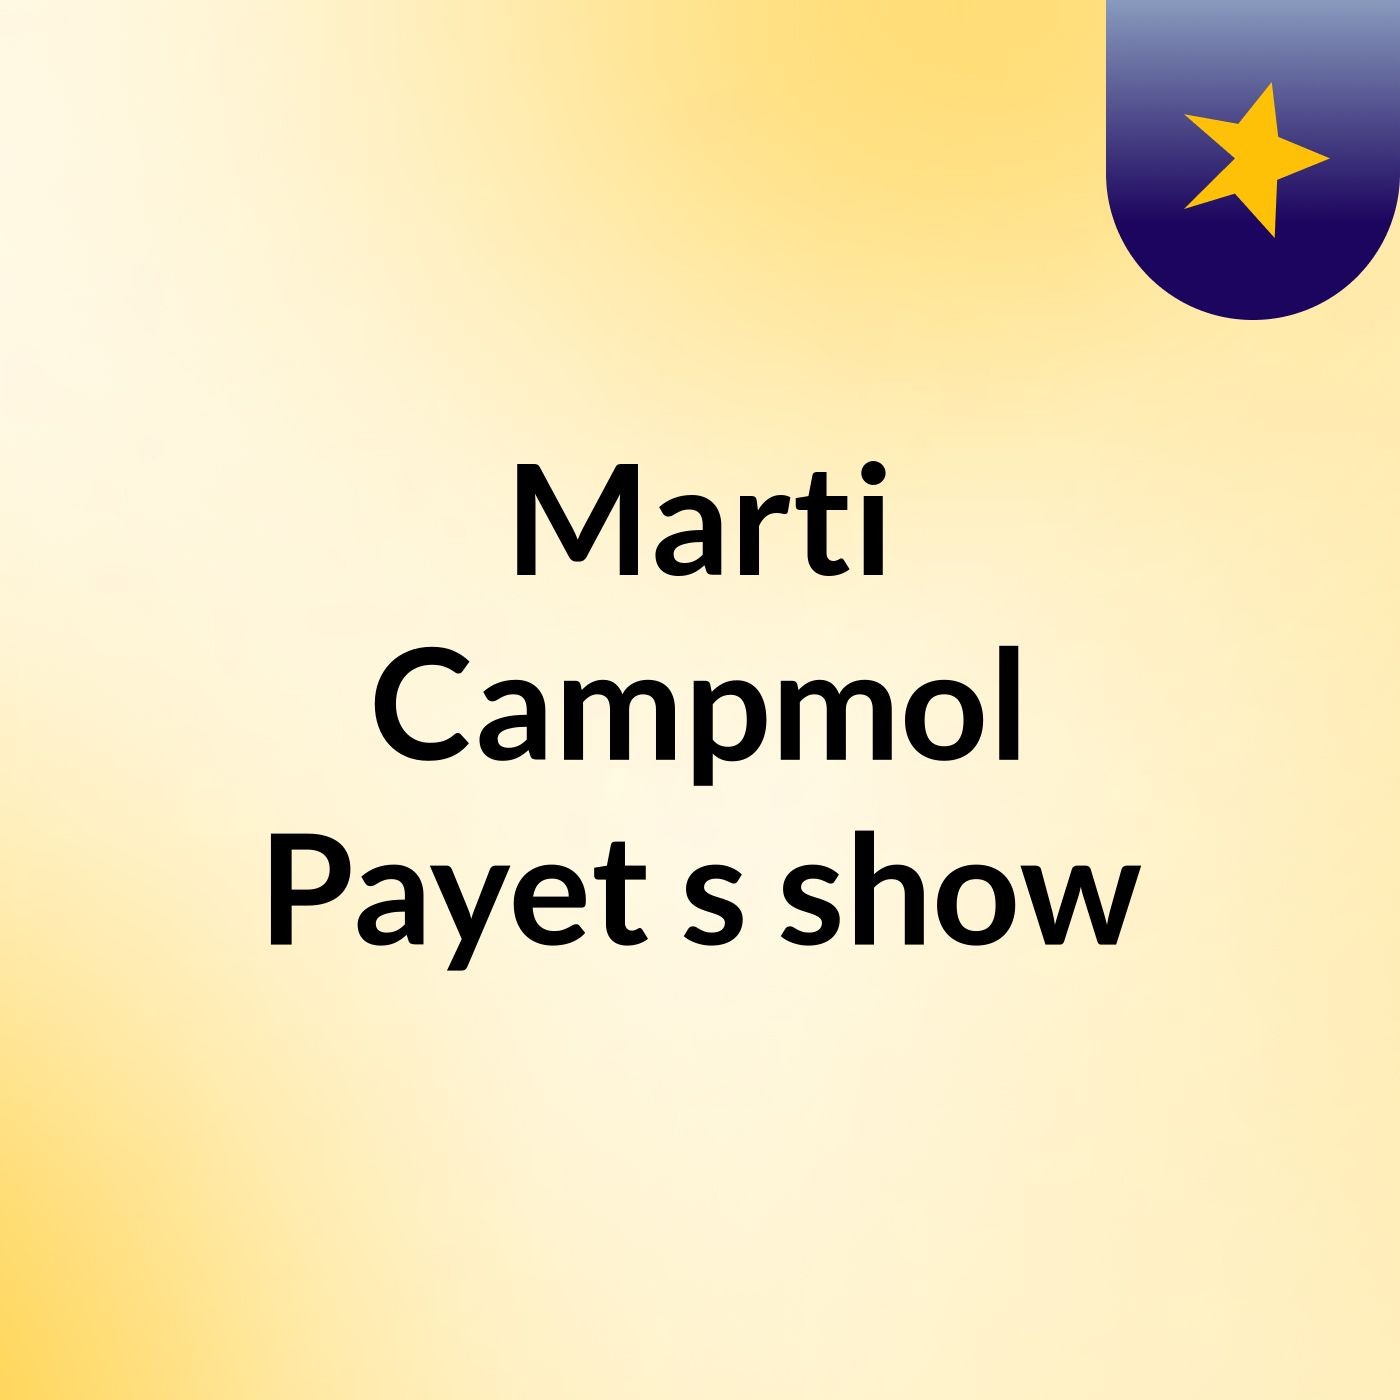 Marti Campmol Payet's show